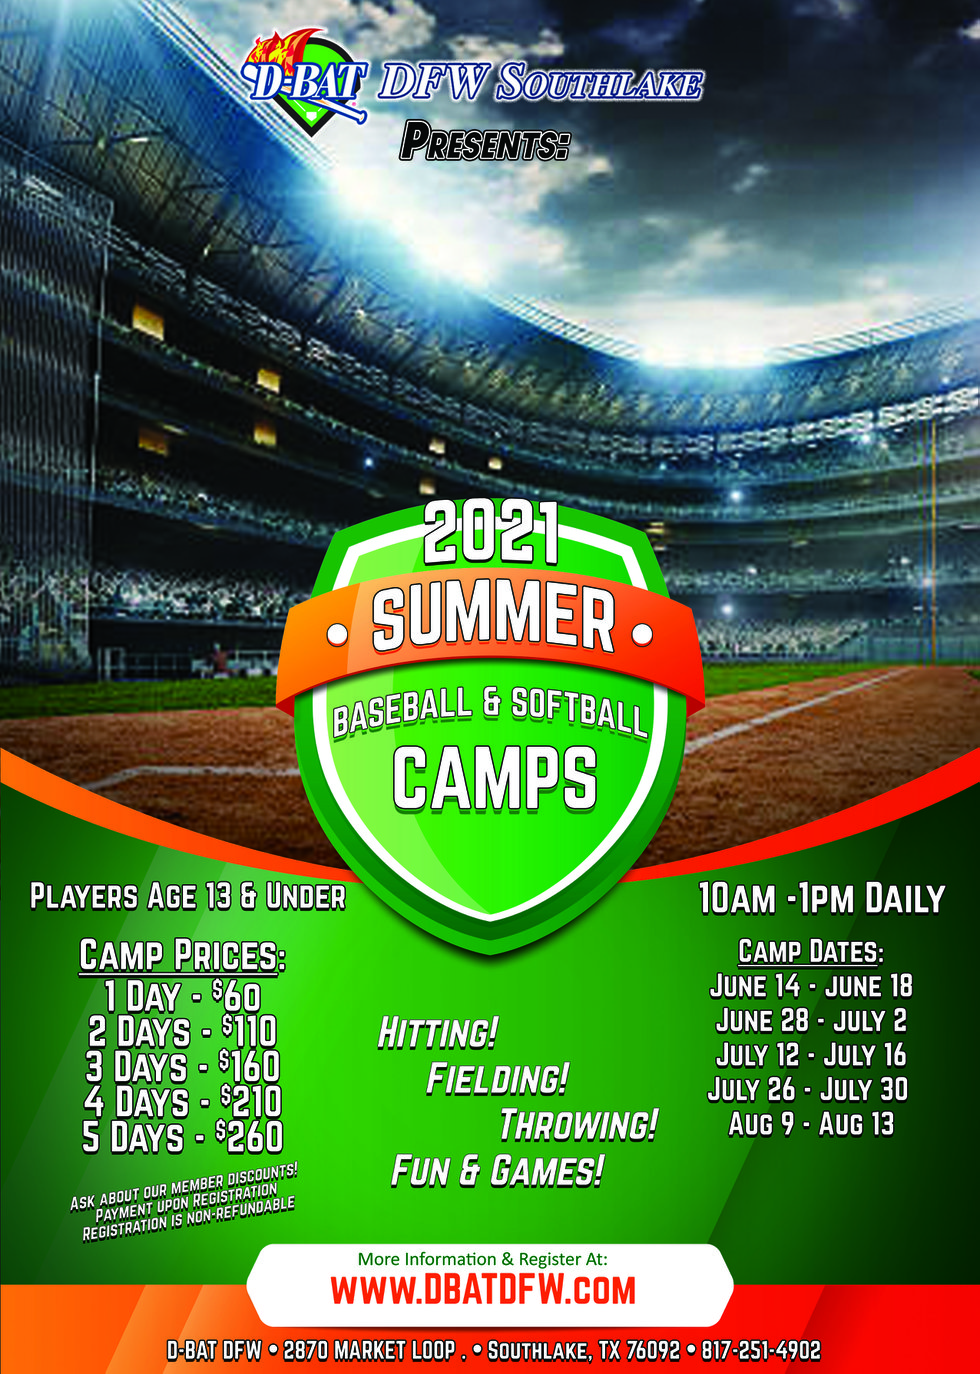 DBAT DFW Southlake 2021 Summer Baseball and Softball Camps